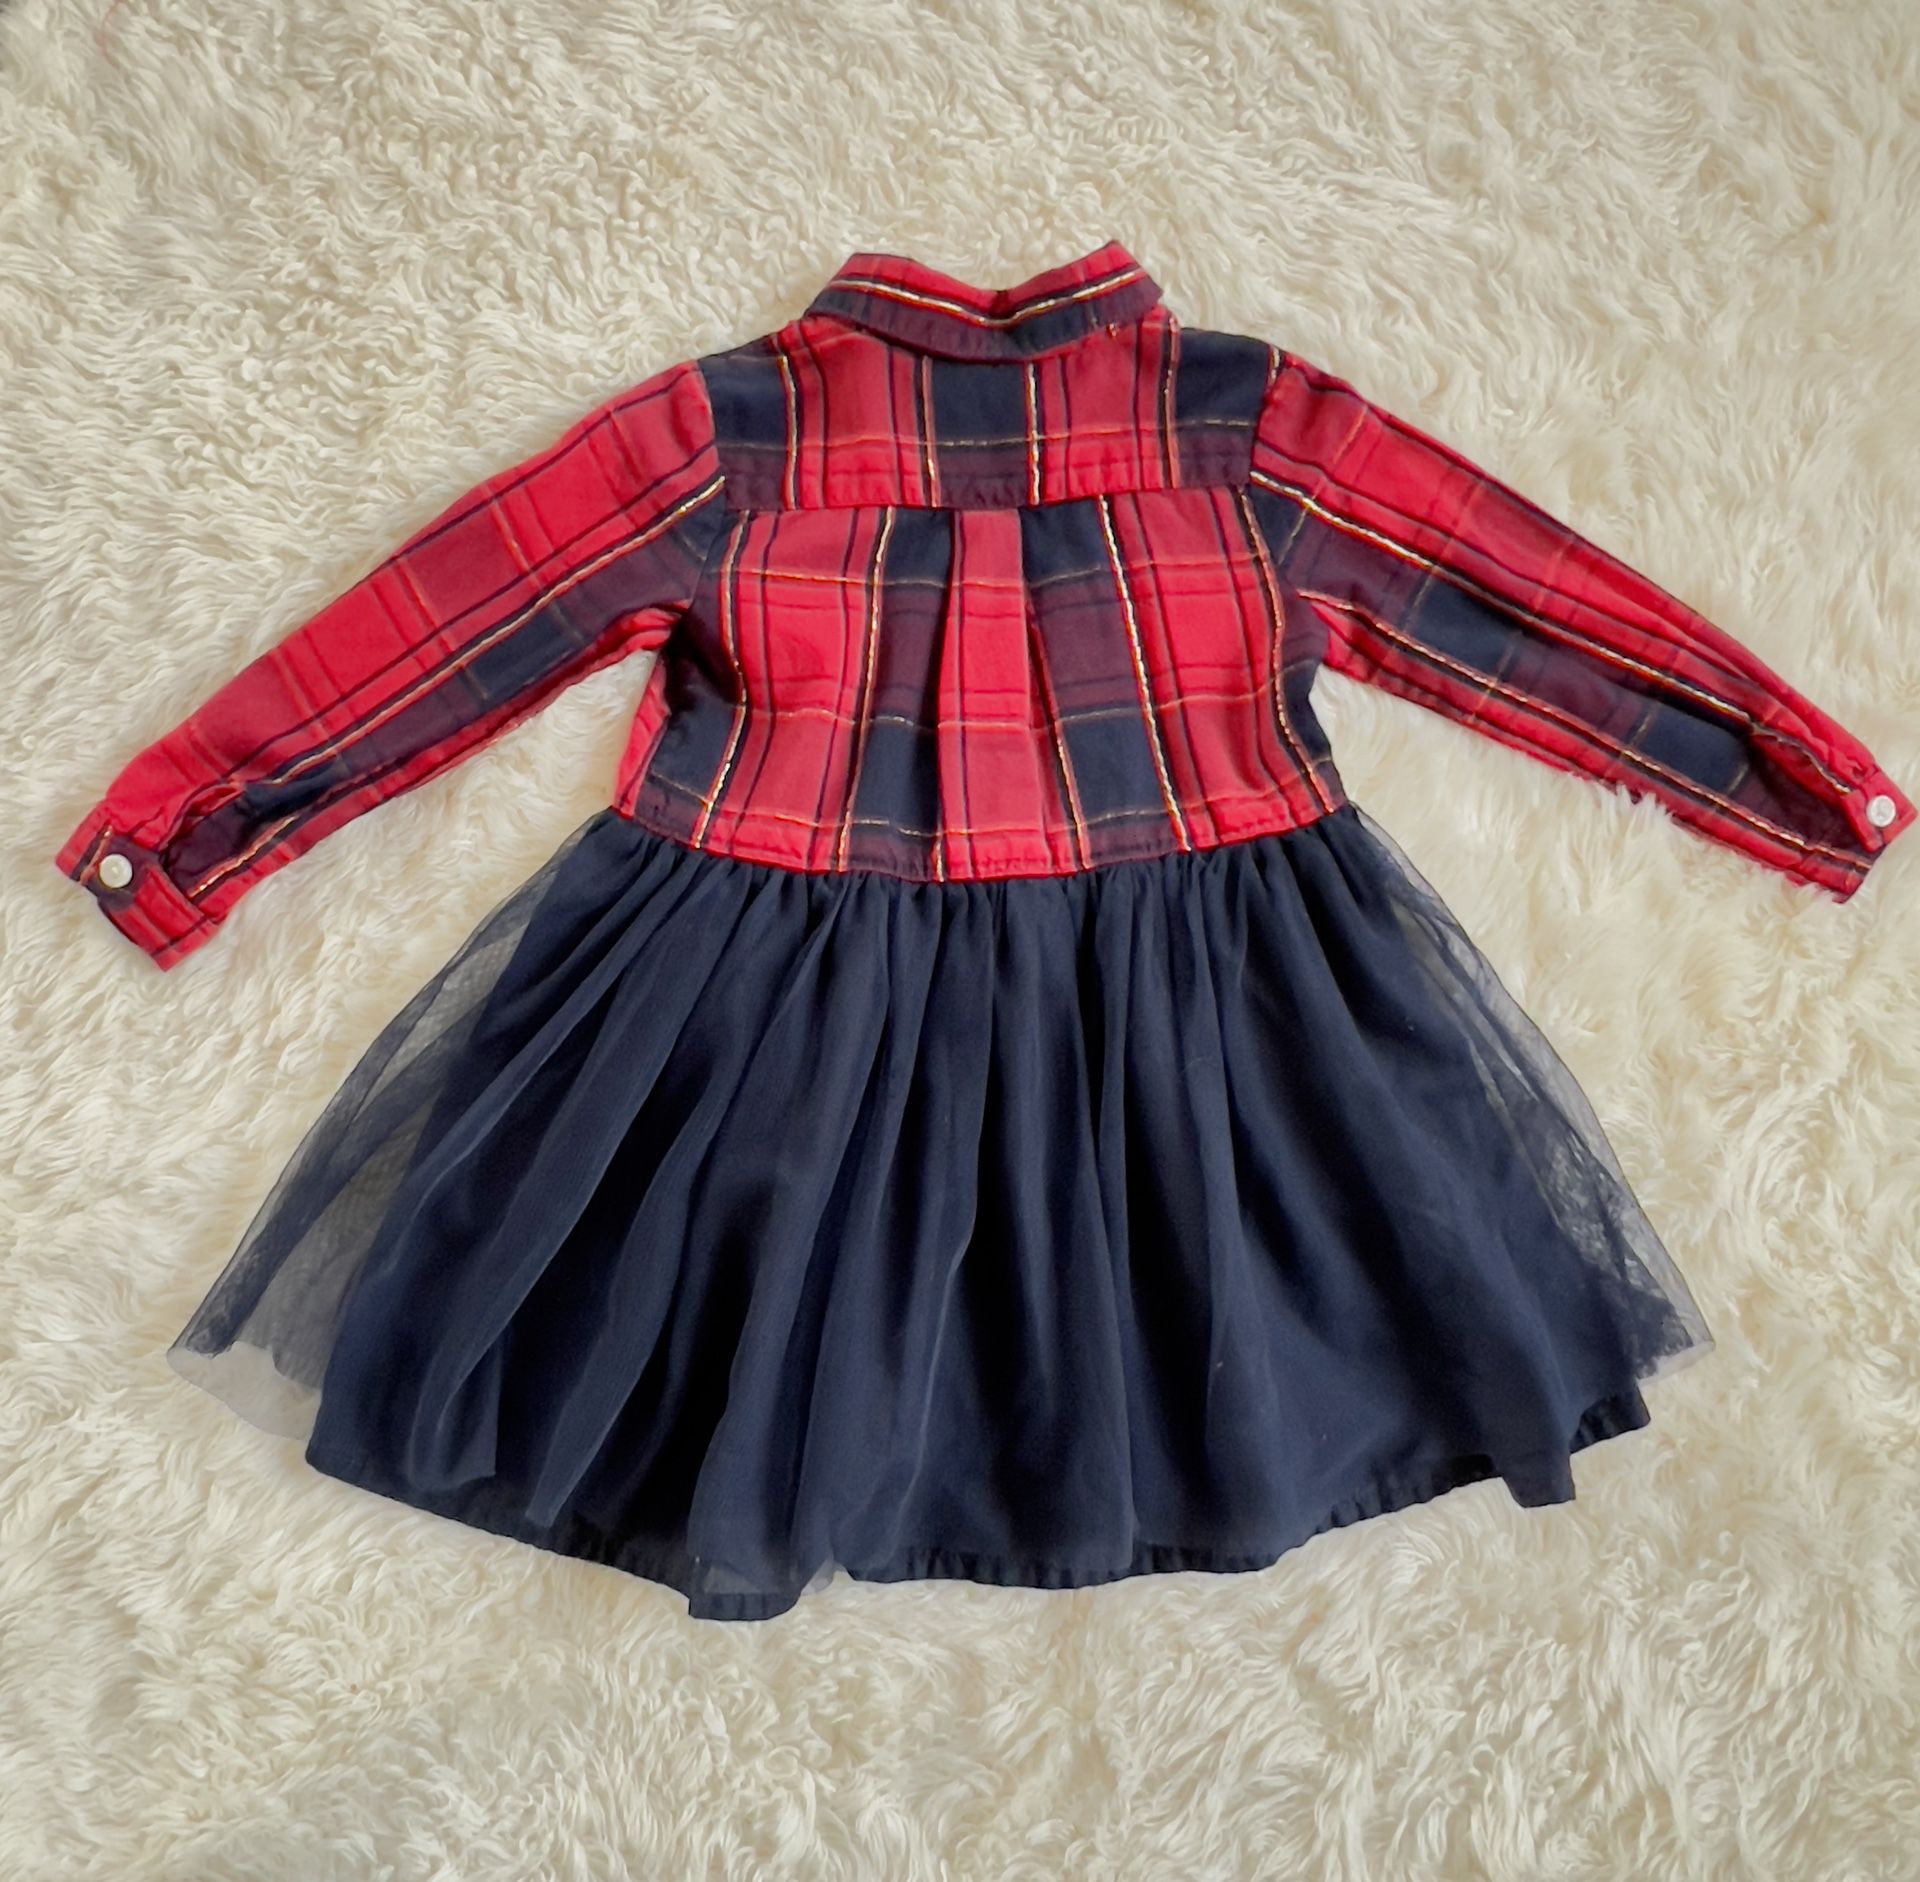 Toddler Oshkosh B’gosh Dress SZ 18-24M